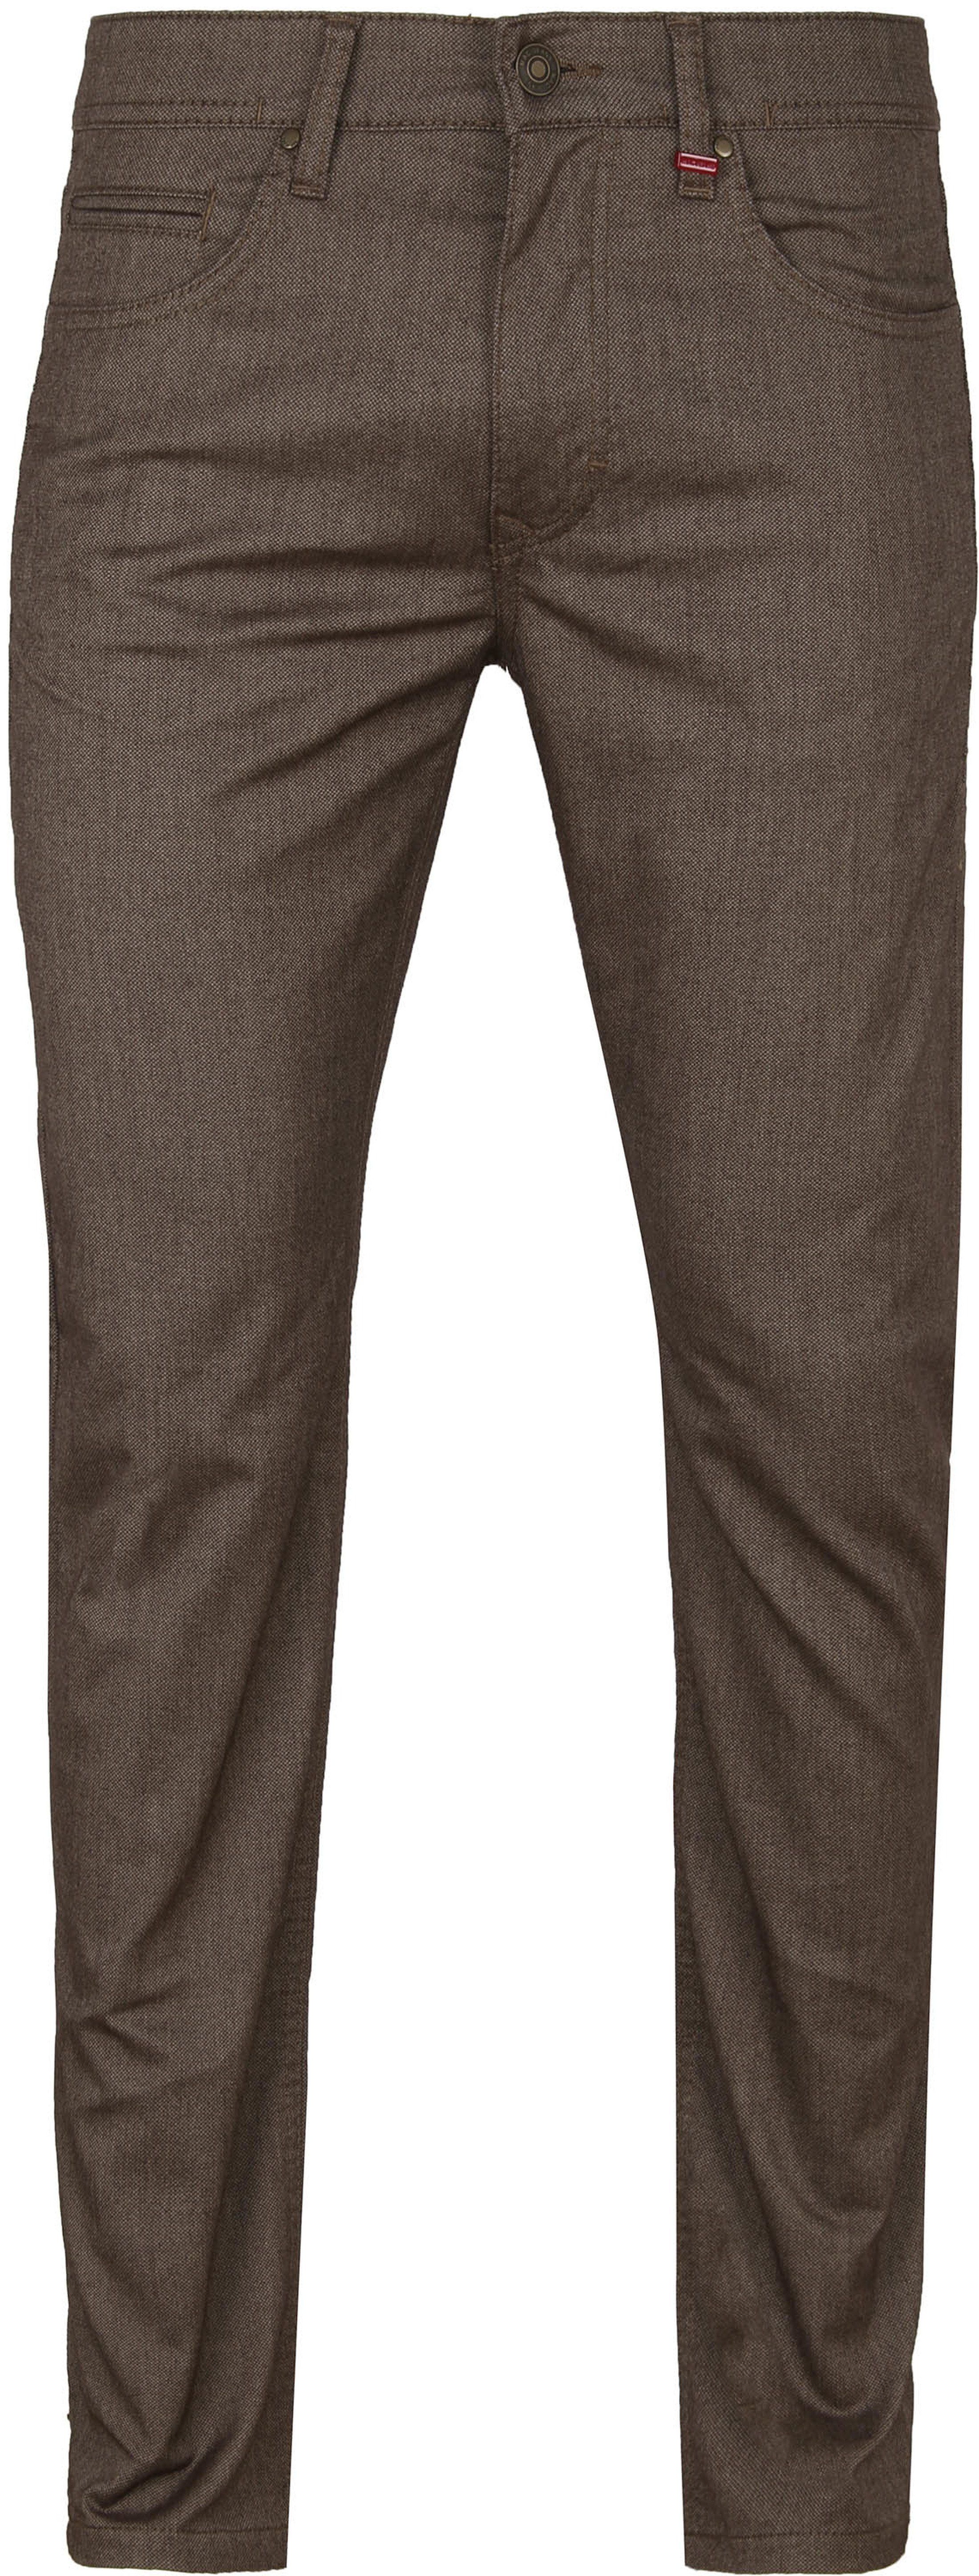 Mac Trousers Arne Pipe Terra Brown size W 31